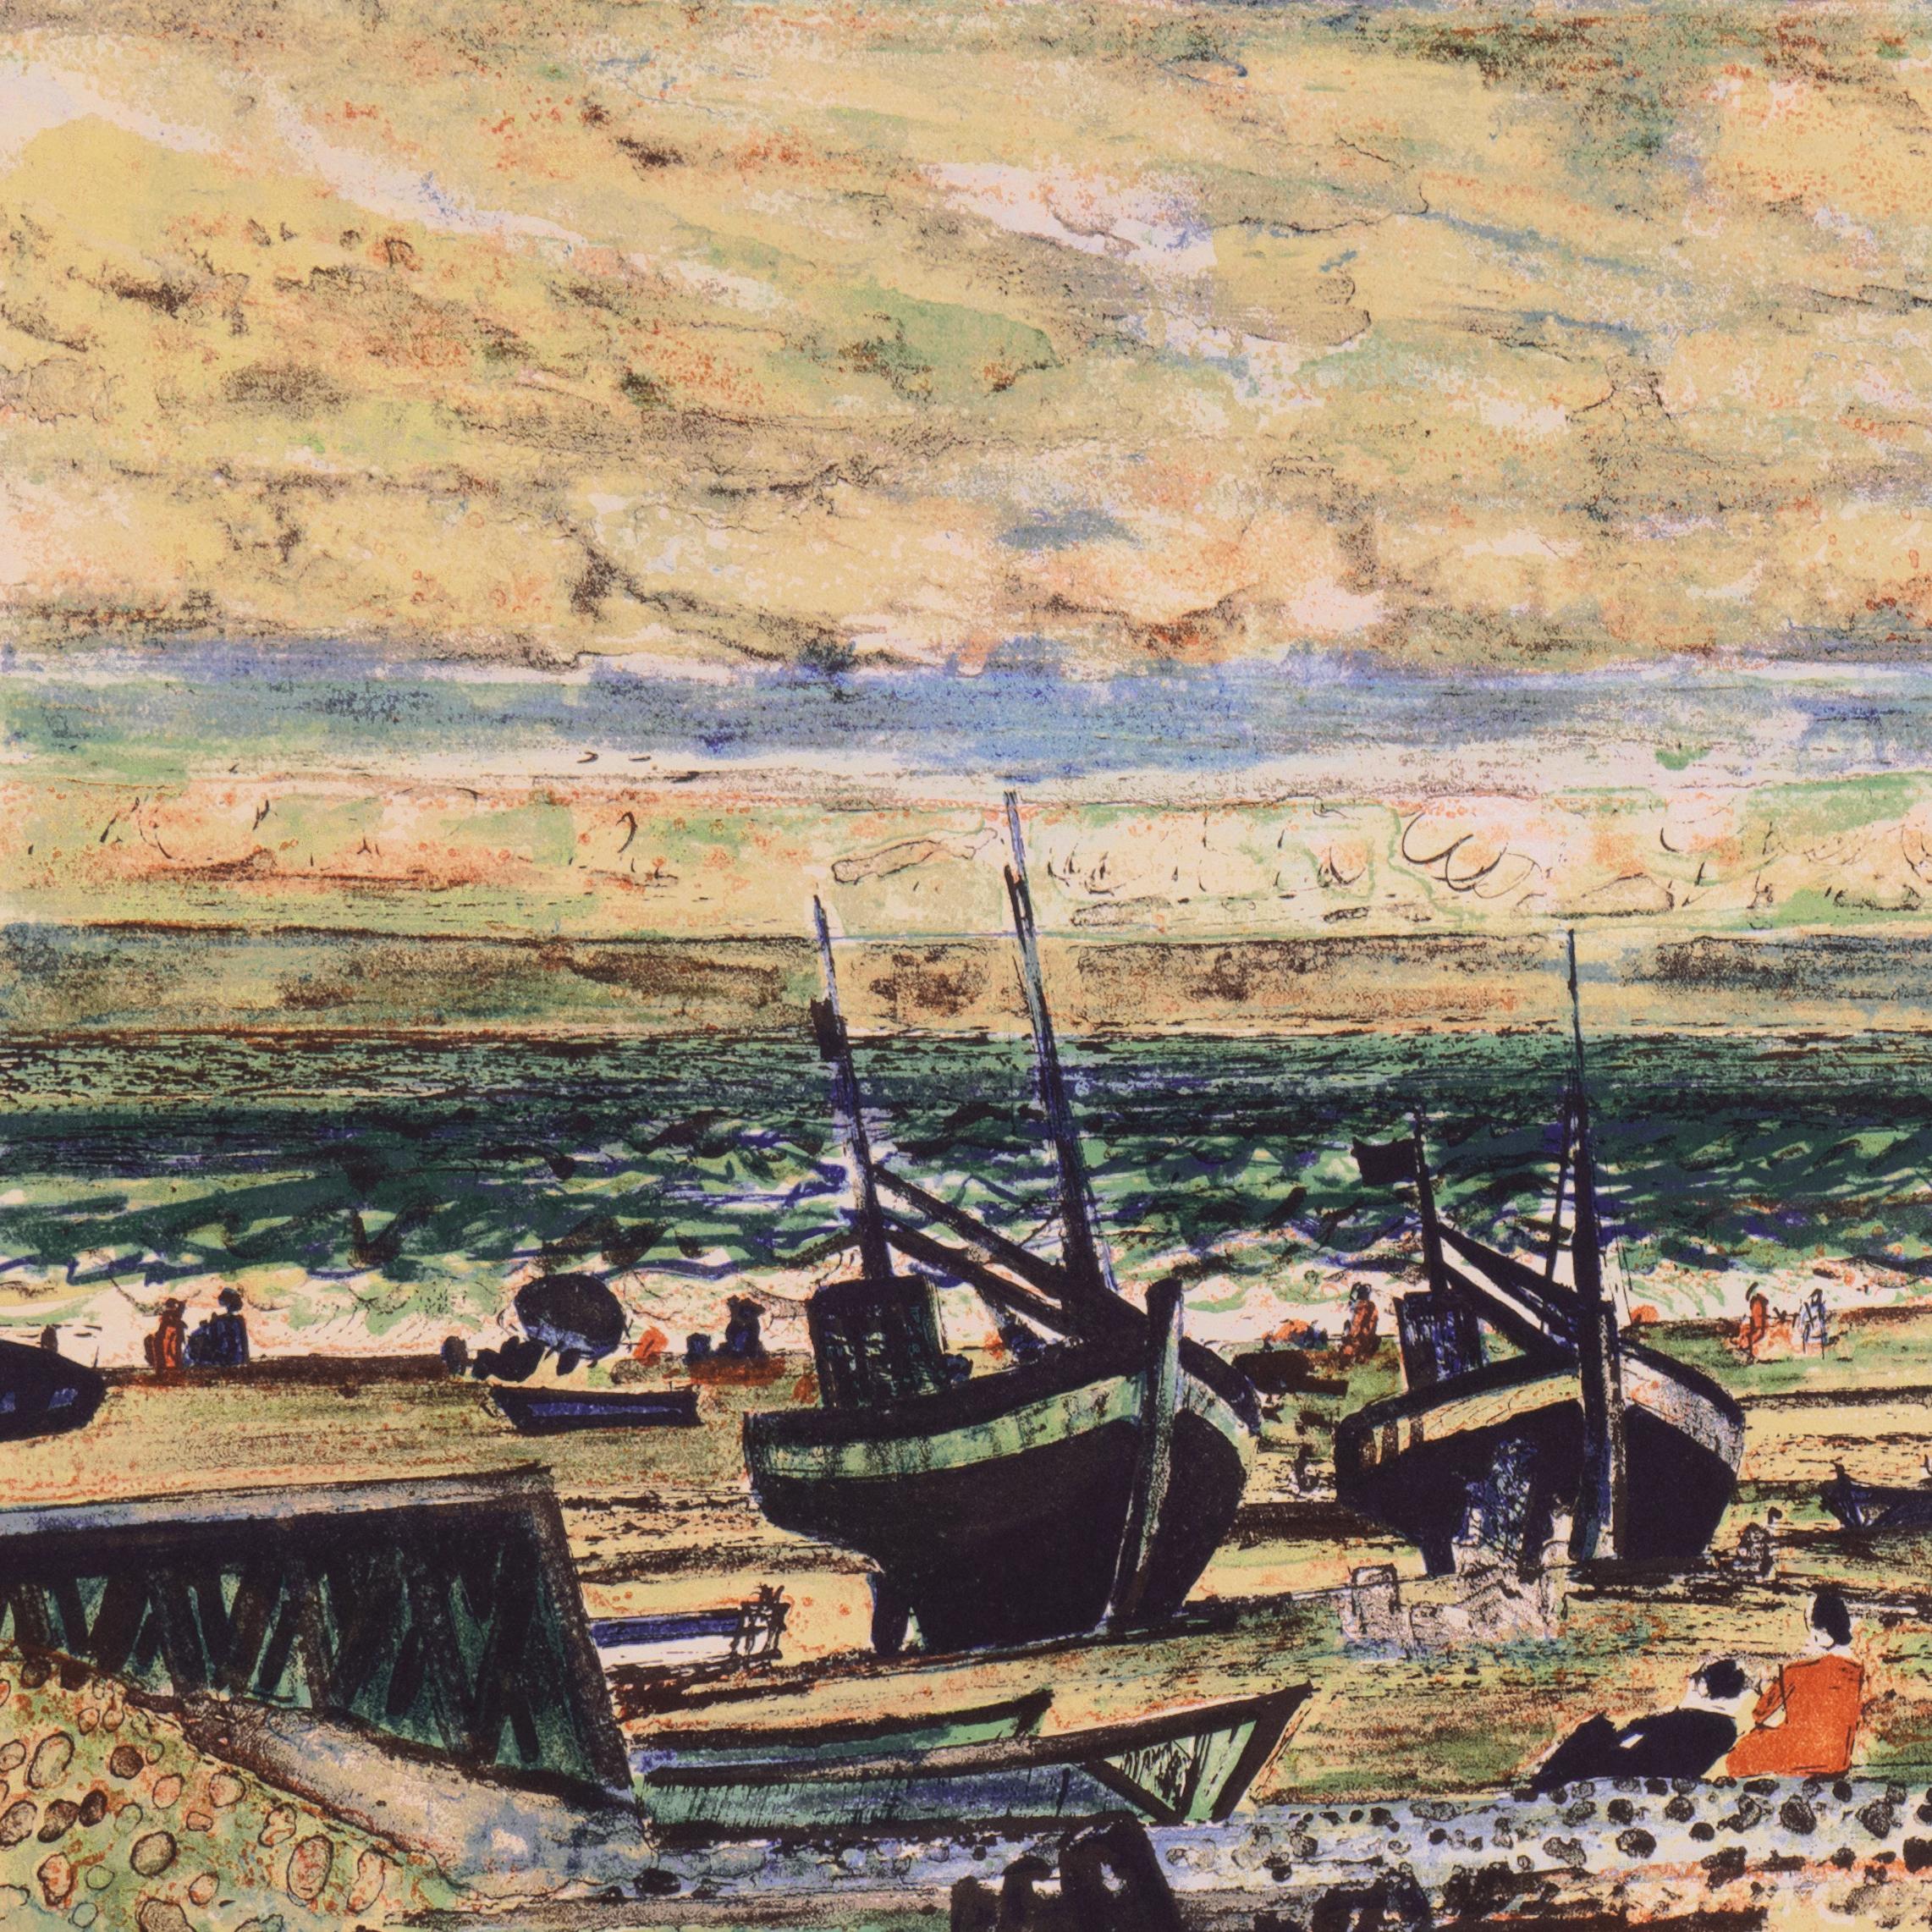 'Fishing Boats on the Atlantic Coast', School of Paris, Post Impressionism - Post-Impressionist Print by Jacques Petit